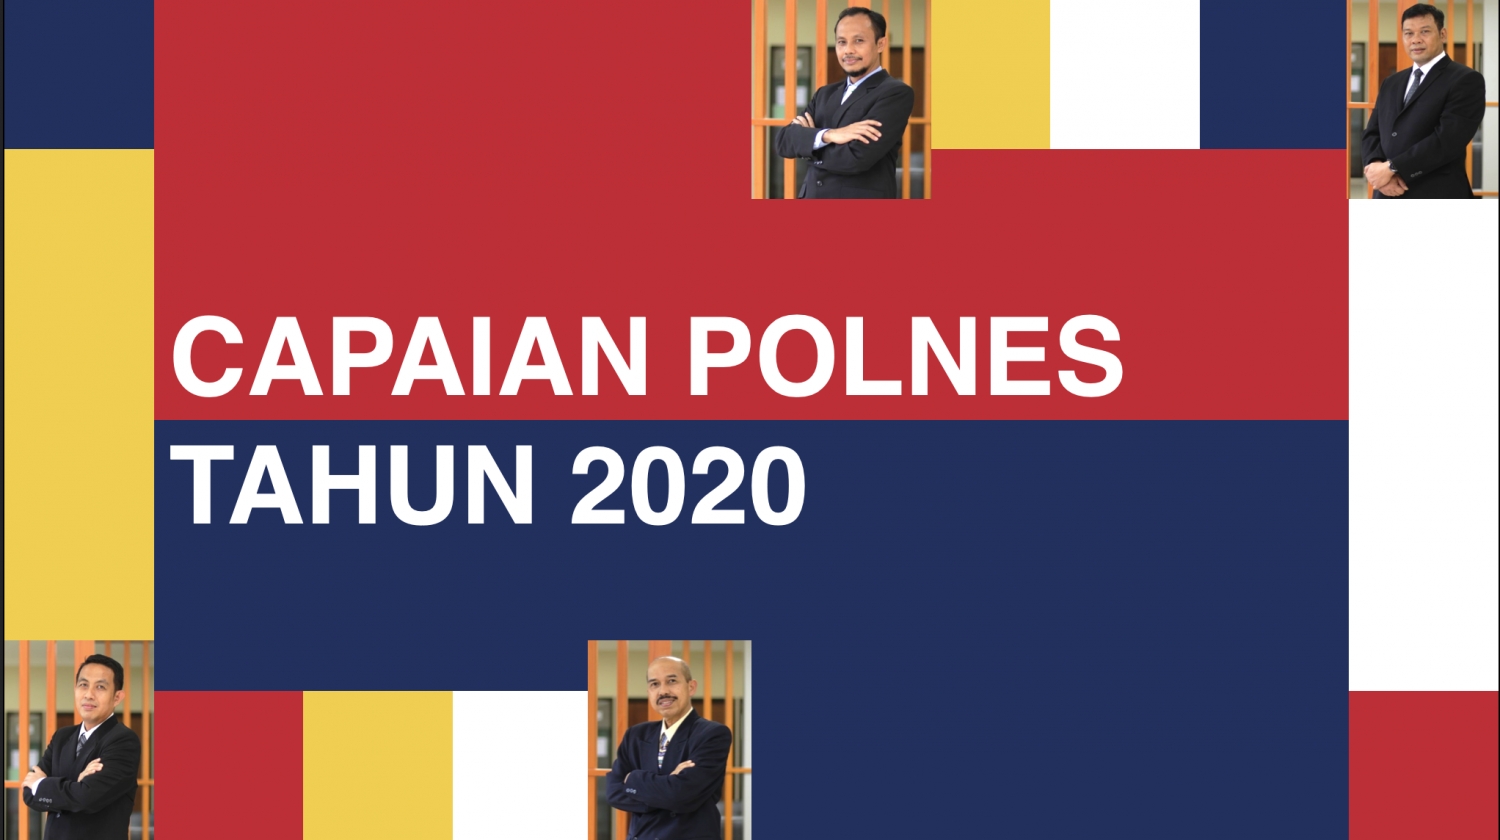 LAPORAN CAPAIAN POLNES 2020